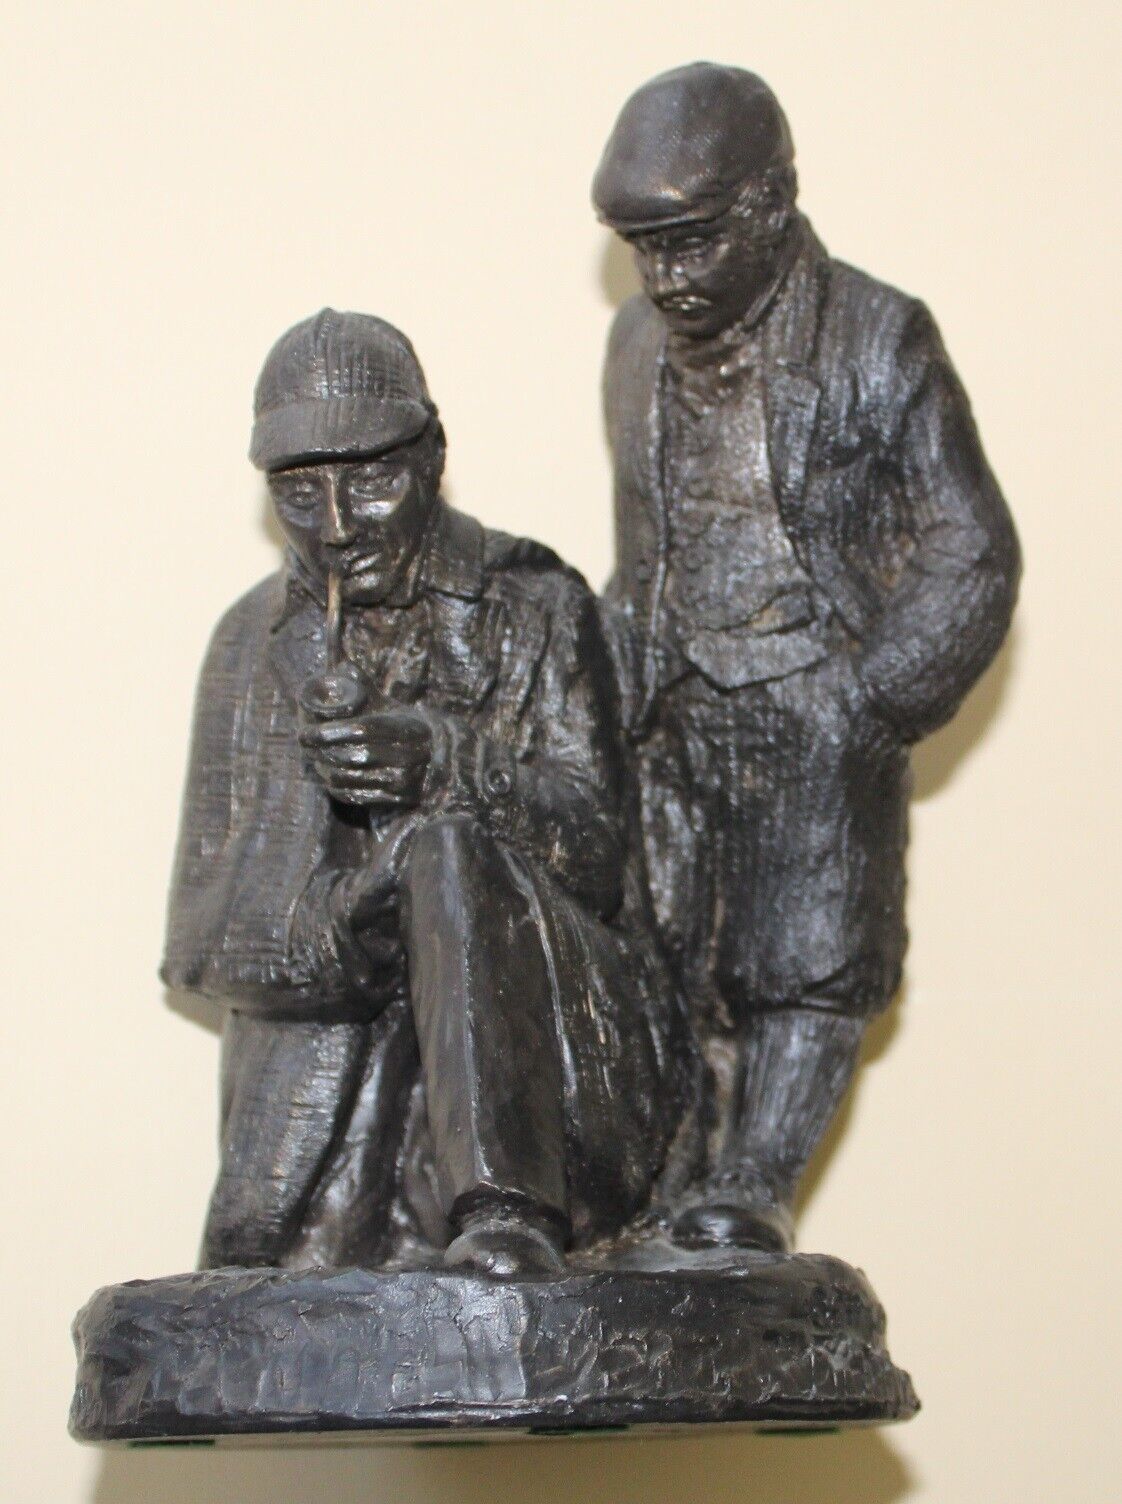 Sherlock Holmes and Watson sculpture - C. Harness